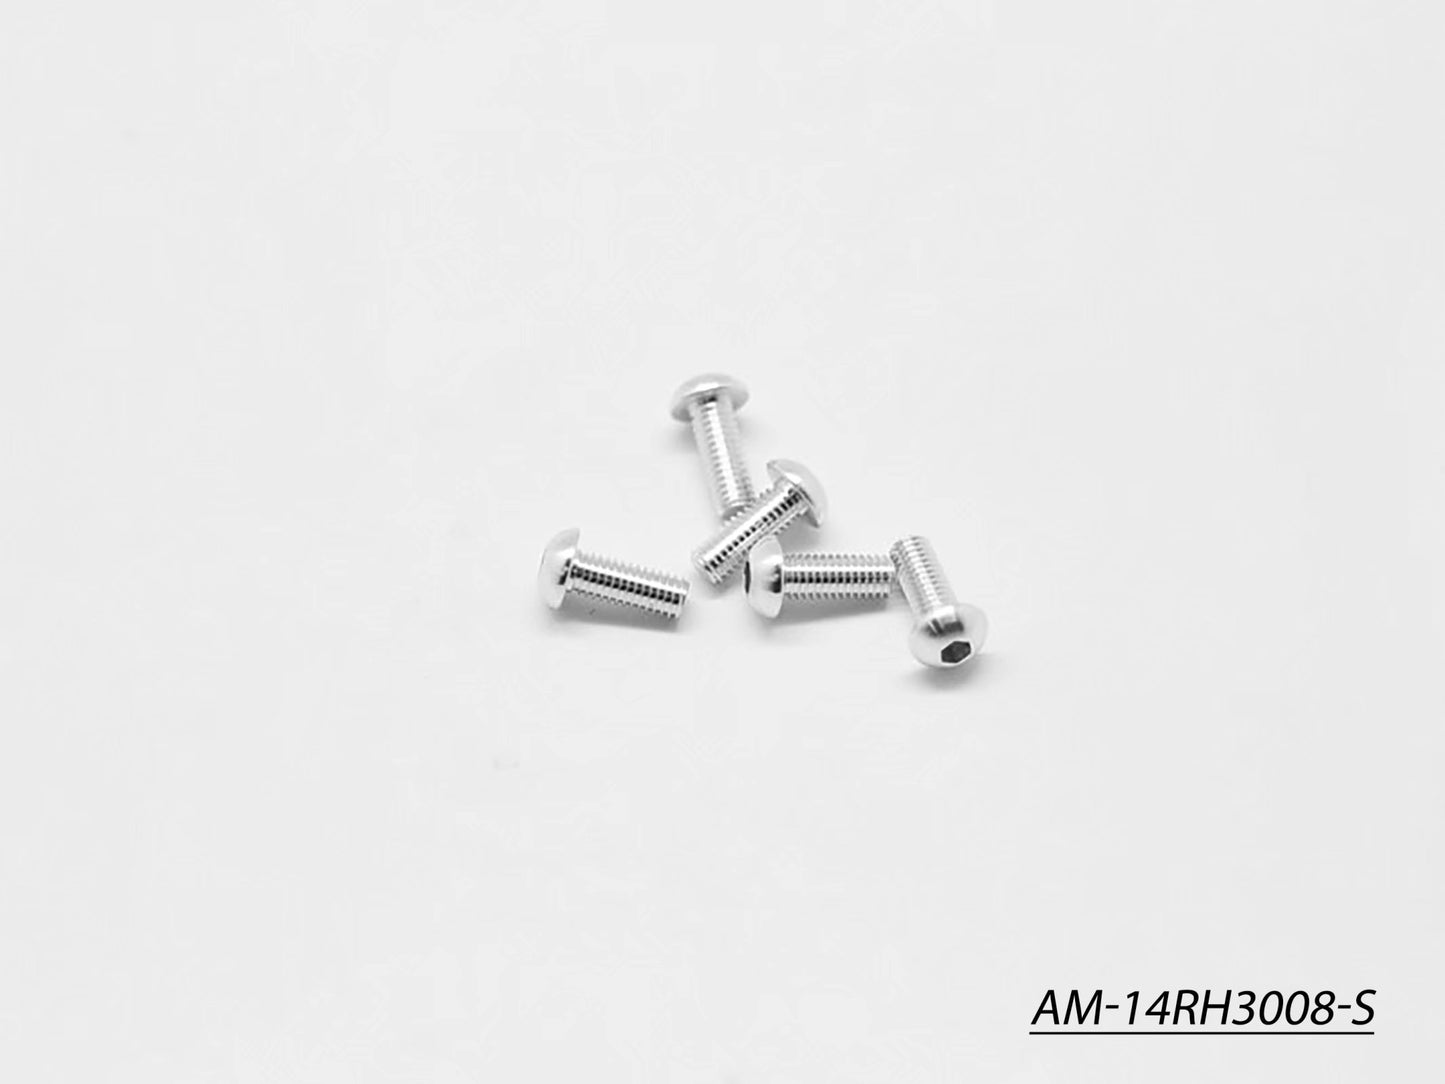 Alu Screw Allen Roundhead M3X8 Silver (7075) (5)  (AM-14RH3008-S)